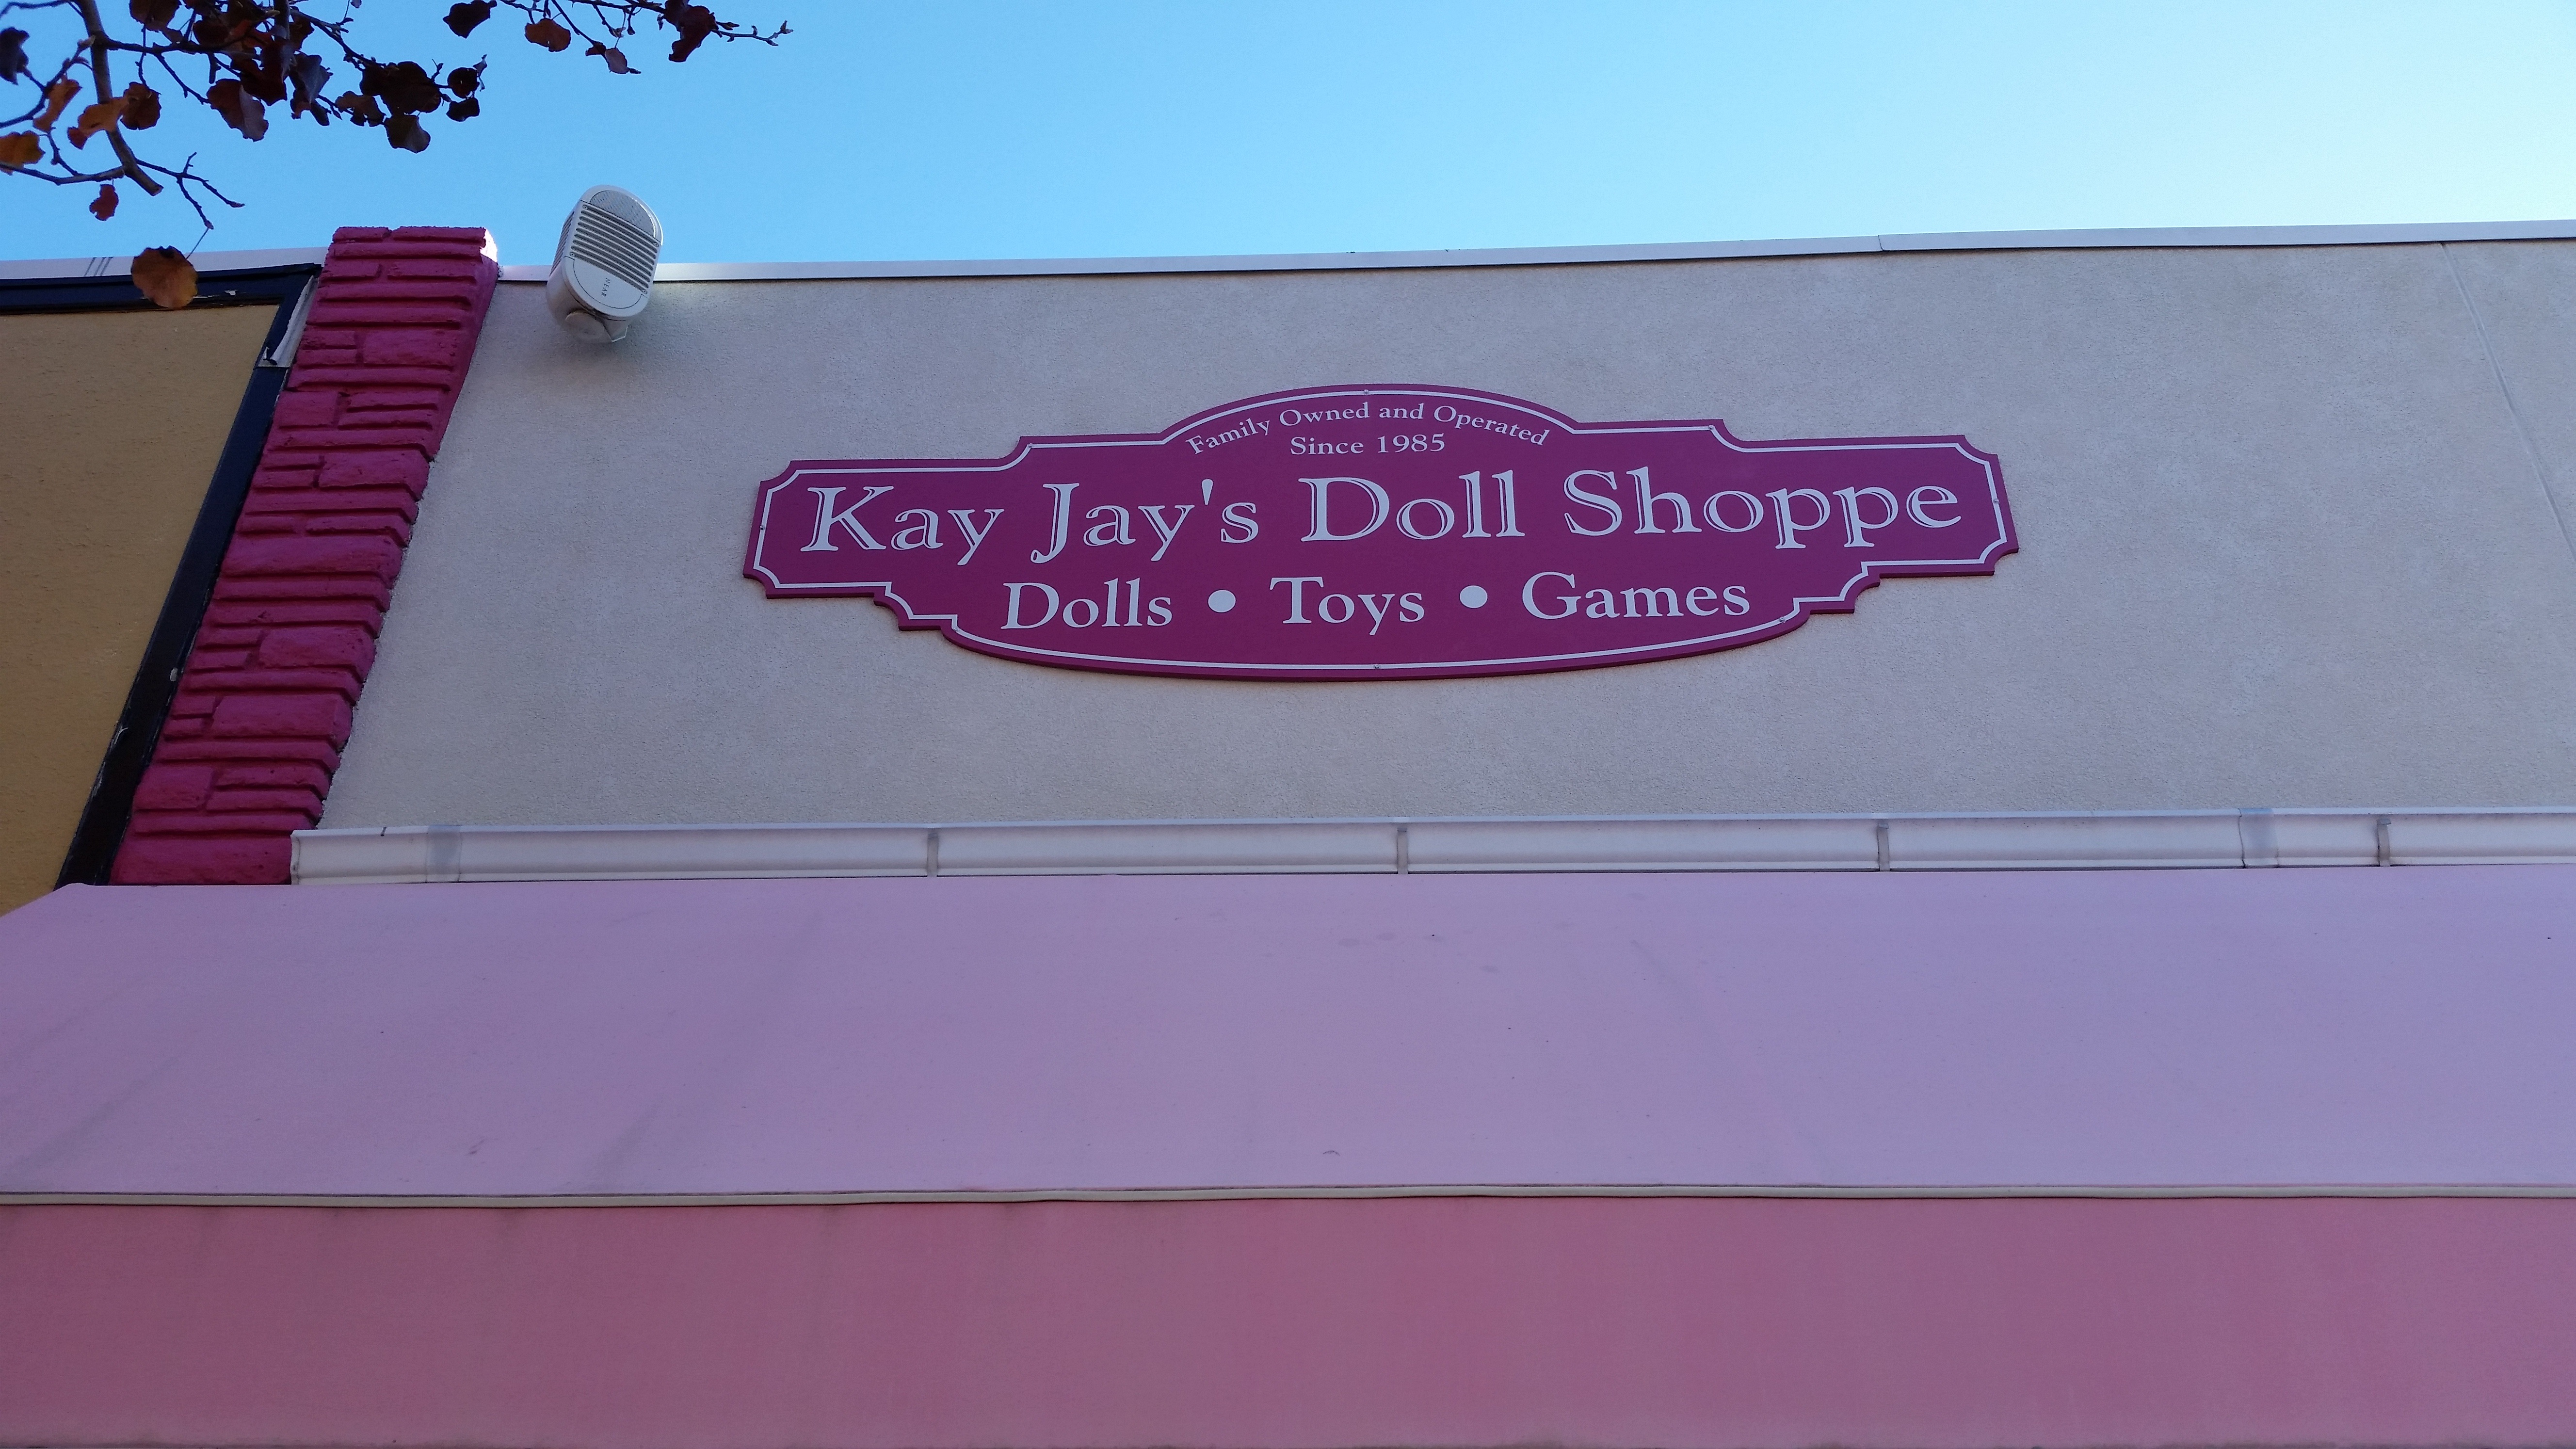 The doll shop has been an Ocean City landmark since 1985.